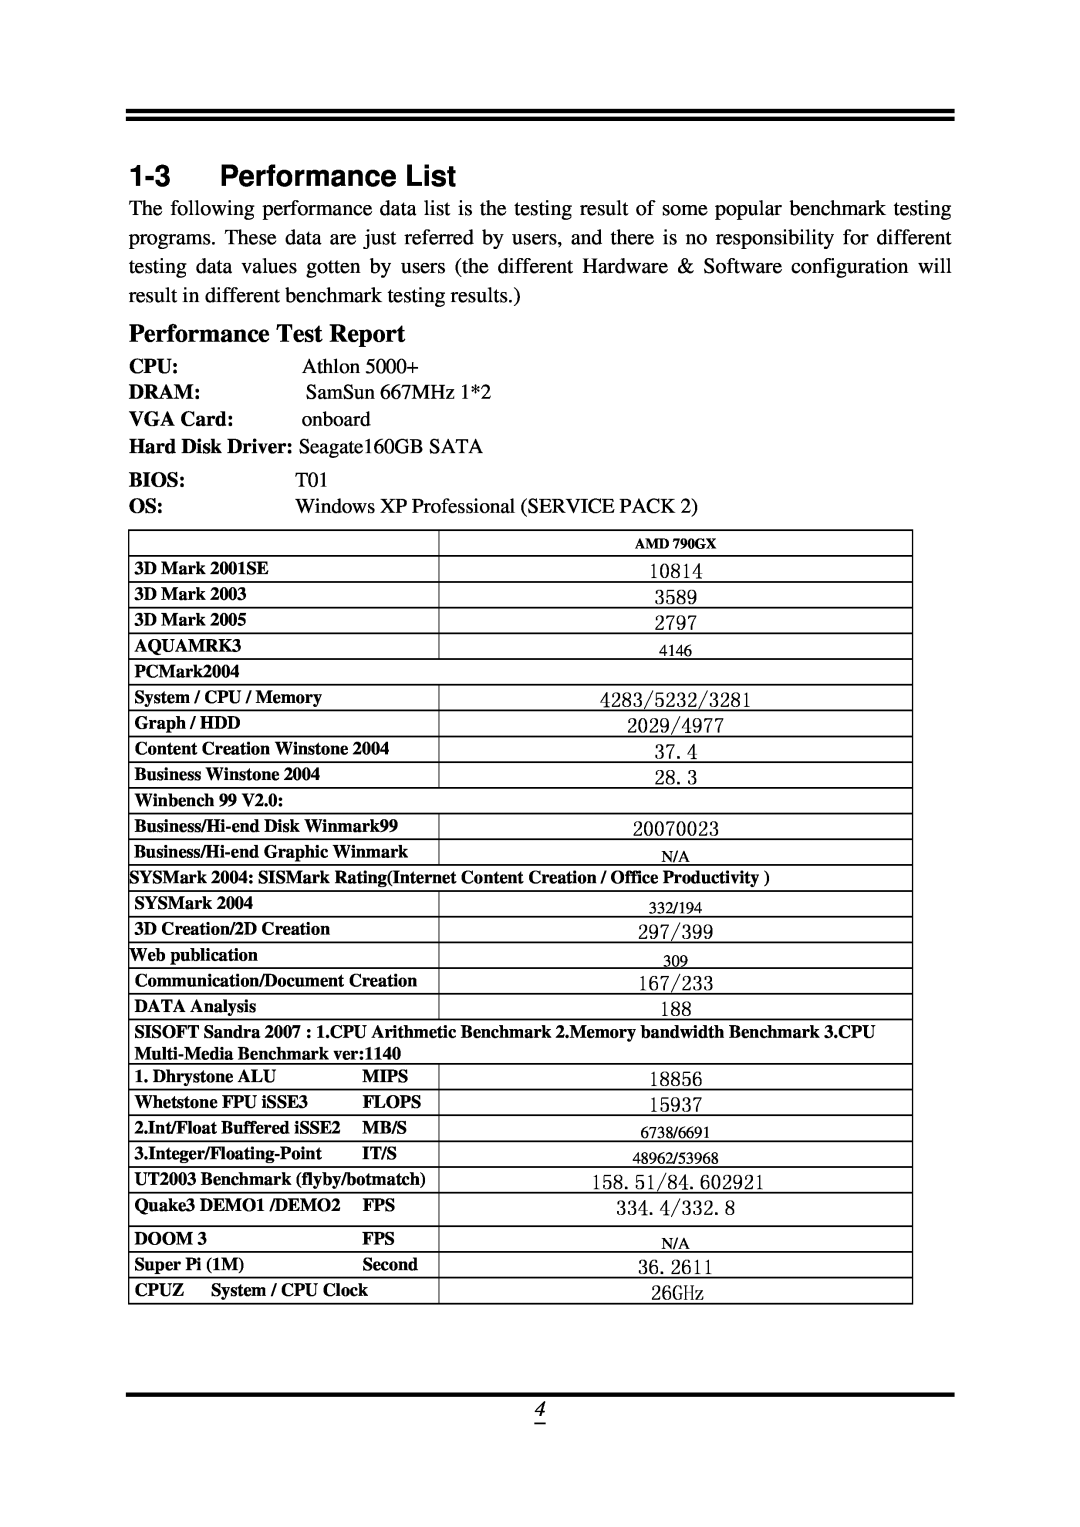 AMD SB750, 790GX user manual Performance List, Performance Test Report 